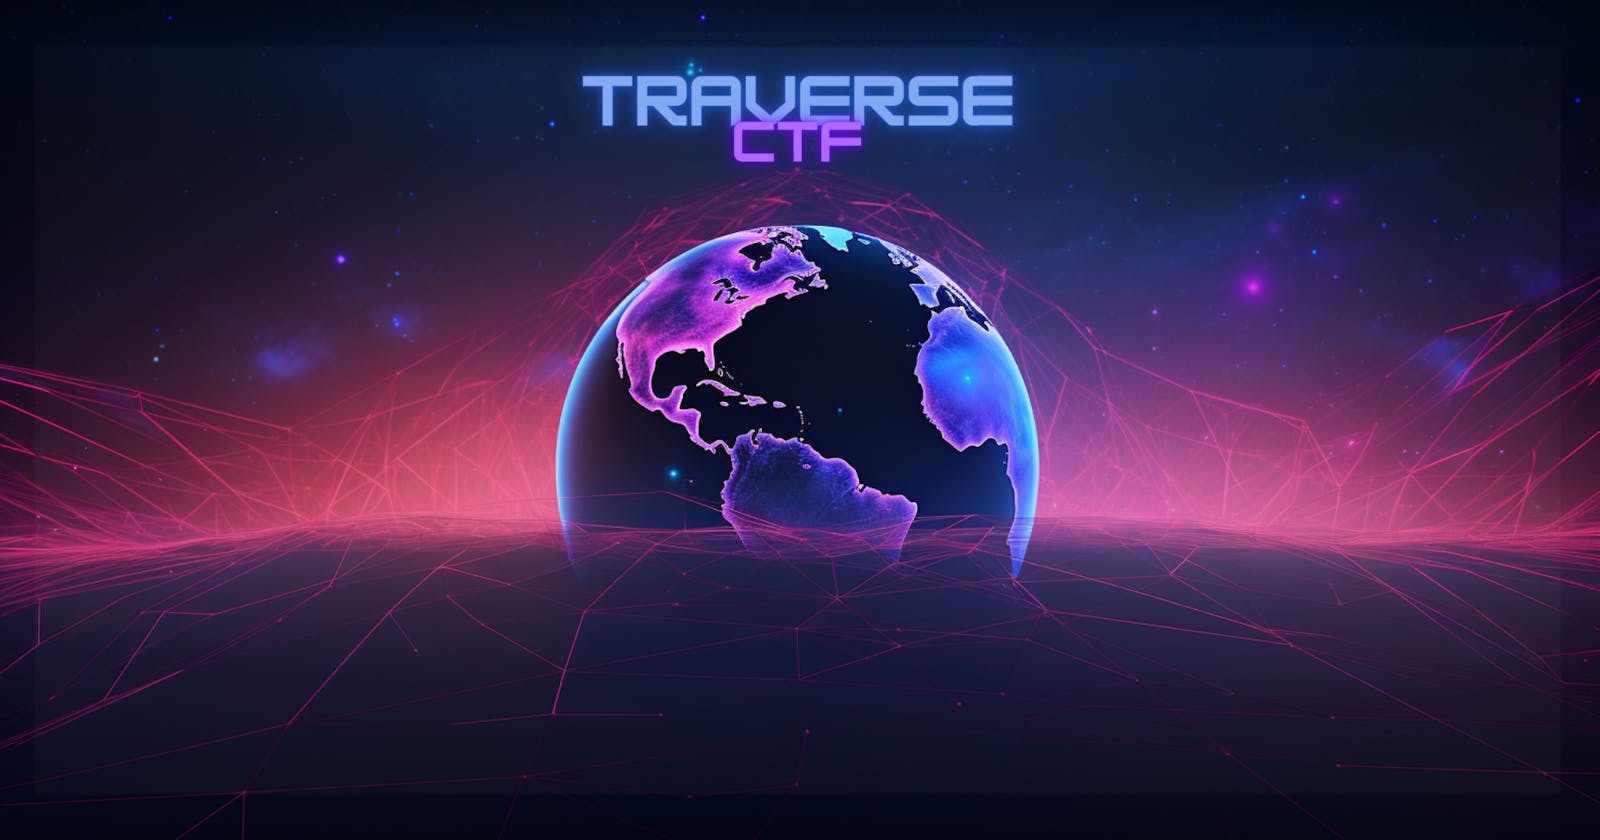 Traverse TryHackMe CTF: Exploit Weak API Security for Privileged Access